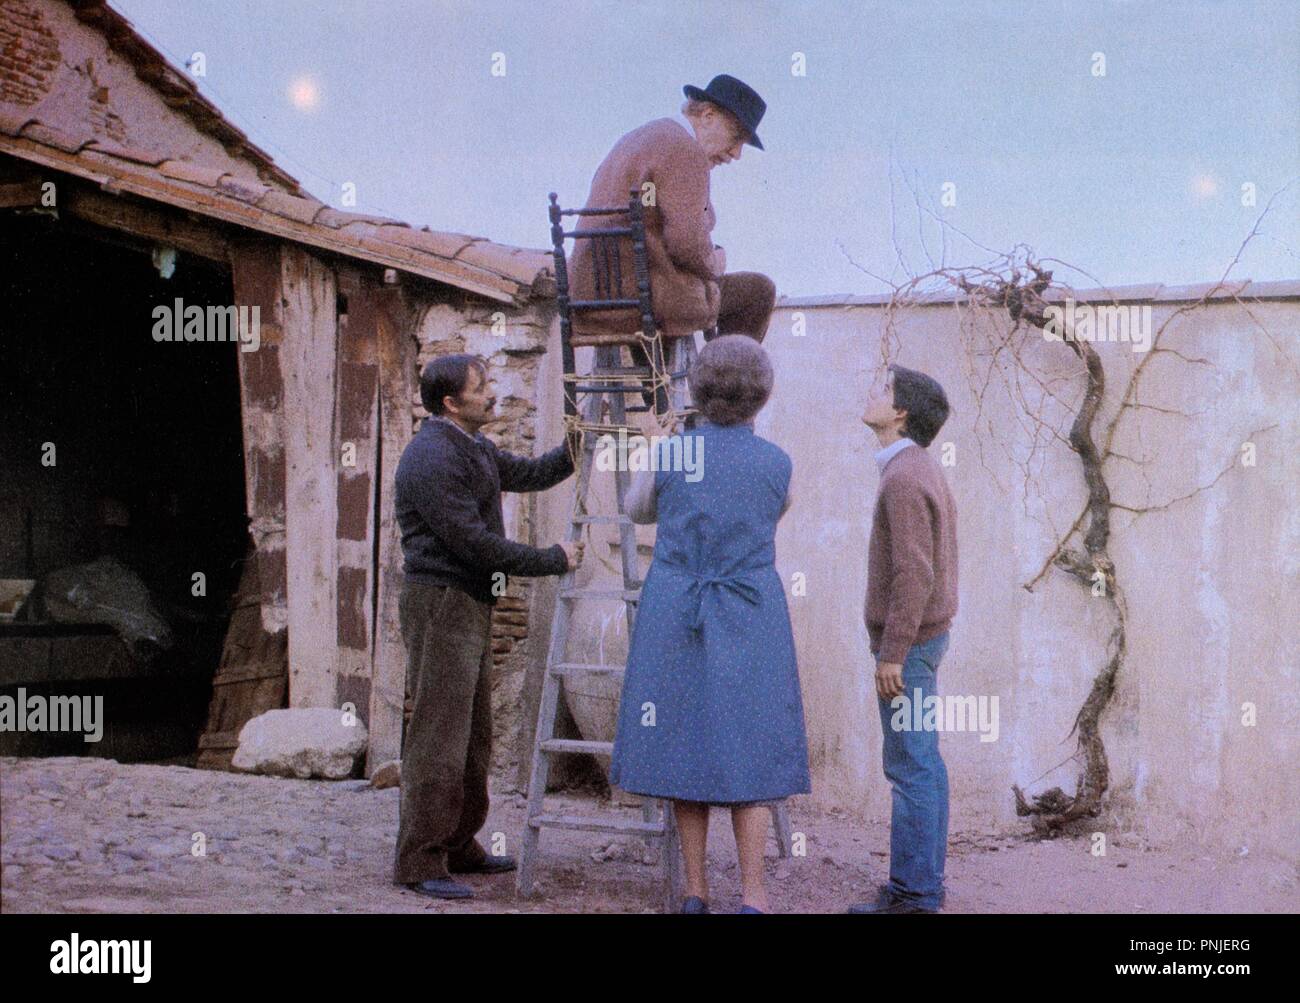 Original film title: MAMBRU SE FUE A LA GUERRA. English title: MAMBRU SE FUE A LA GUERRA. Year: 1986. Director: FERNANDO FERNAN GOMEZ. Stars: FERNANDO FERNAN GOMEZ; JORGE SANZ. Credit: ALTAIR PRODUCCIONES / Album Stock Photo